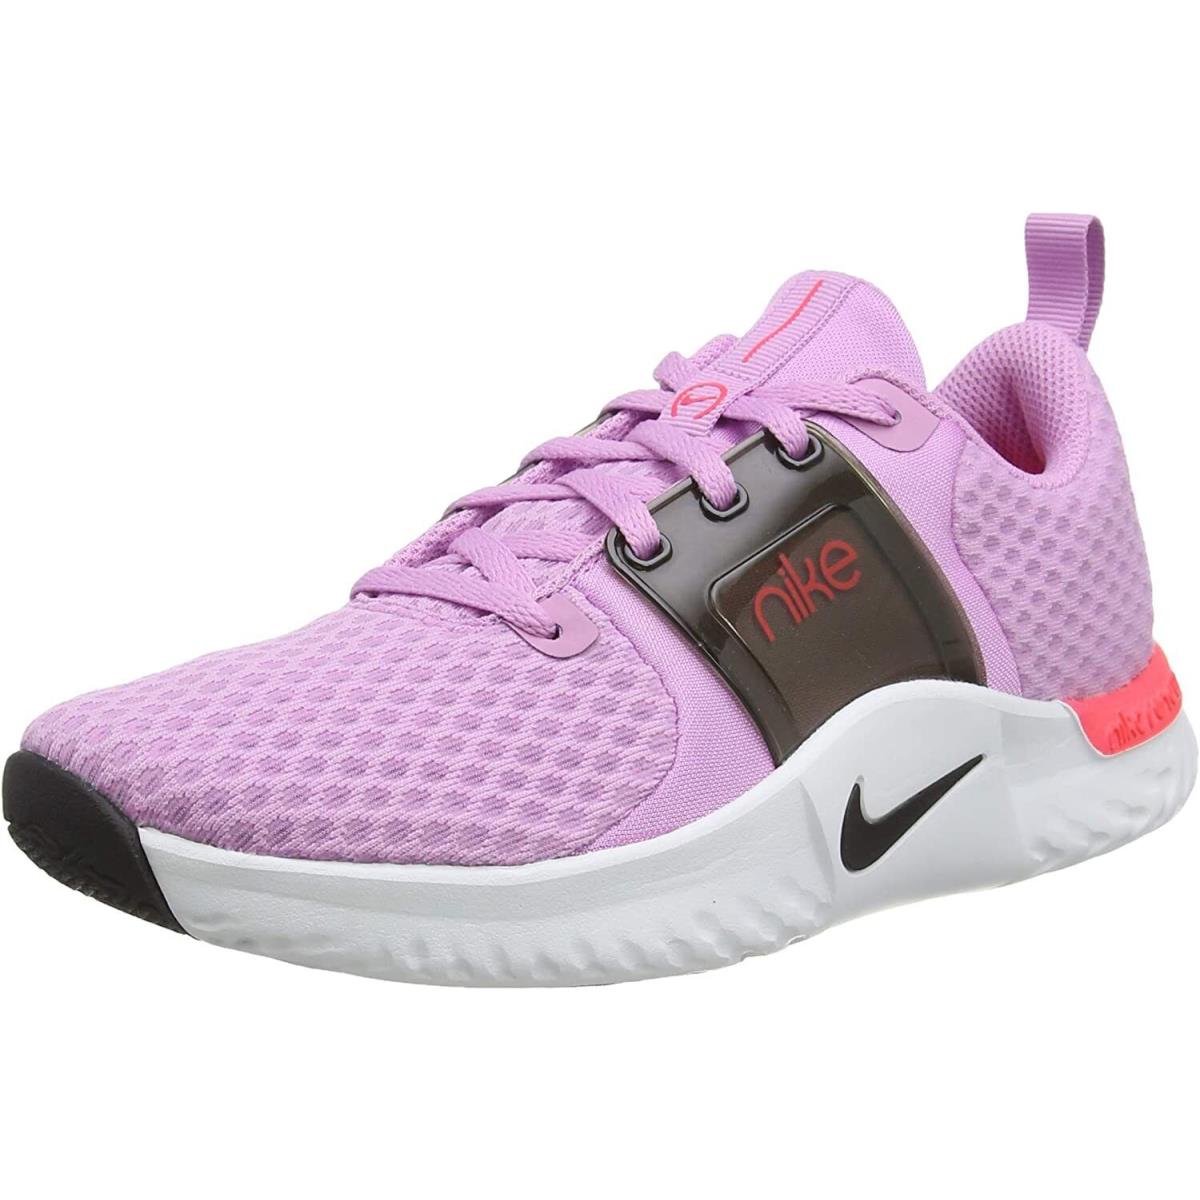 Nike Re In Season TR 10 Running Shoes White CK2576 600 sz 8.5-10 Pink - Pink